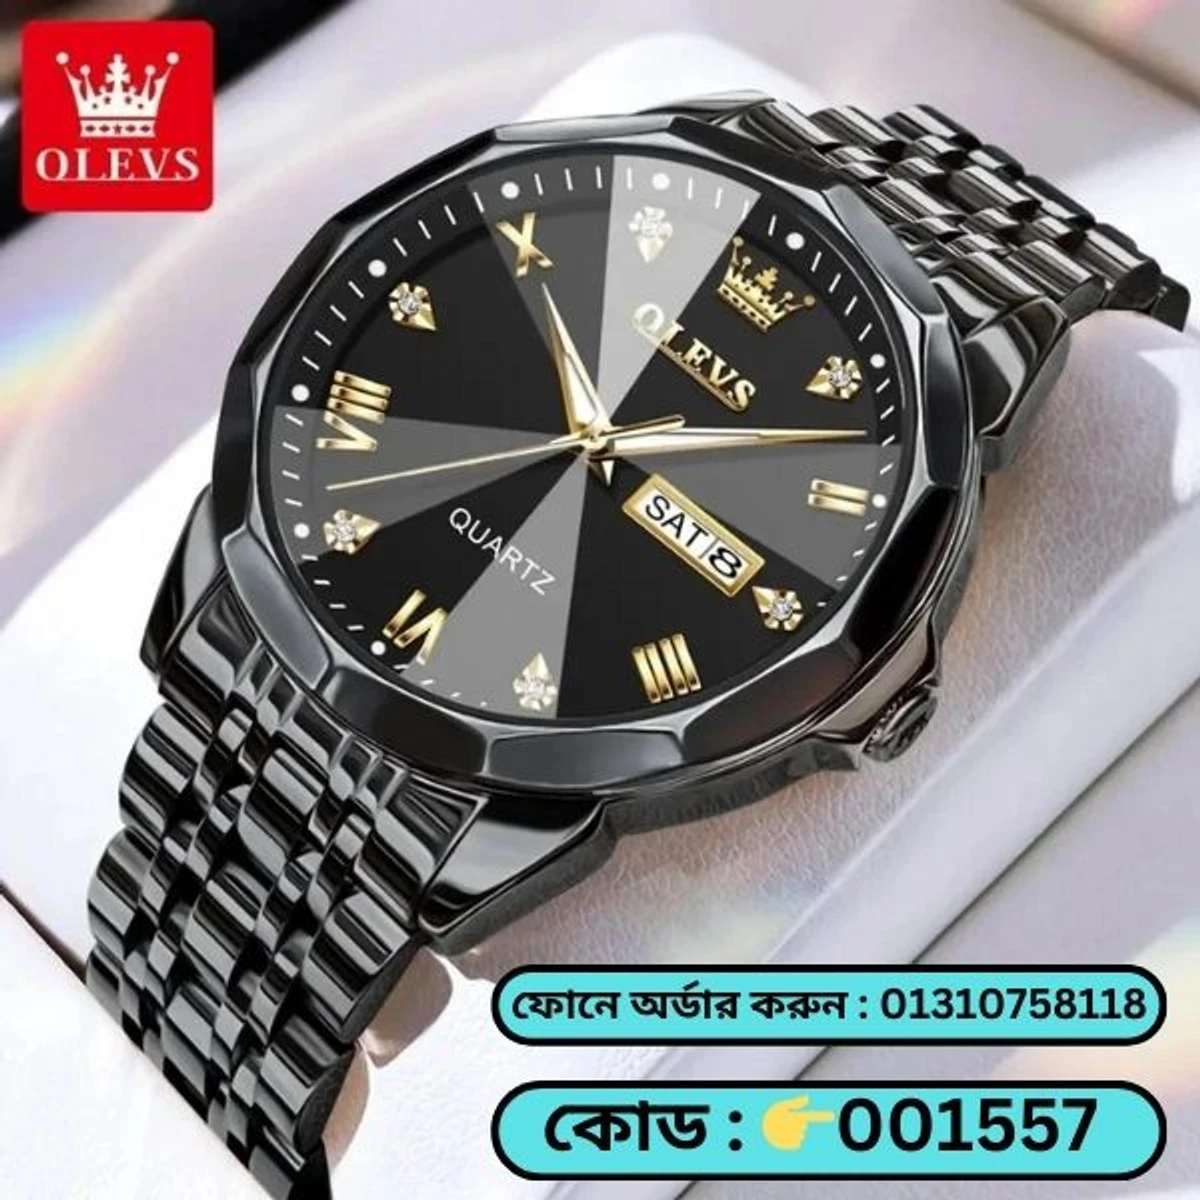 OLEVS MODEL 9931 Watch for Men Stainless Steel Watches - 9941 FULL BLACK WATCH- MAN WATCH - LOCK PUSH